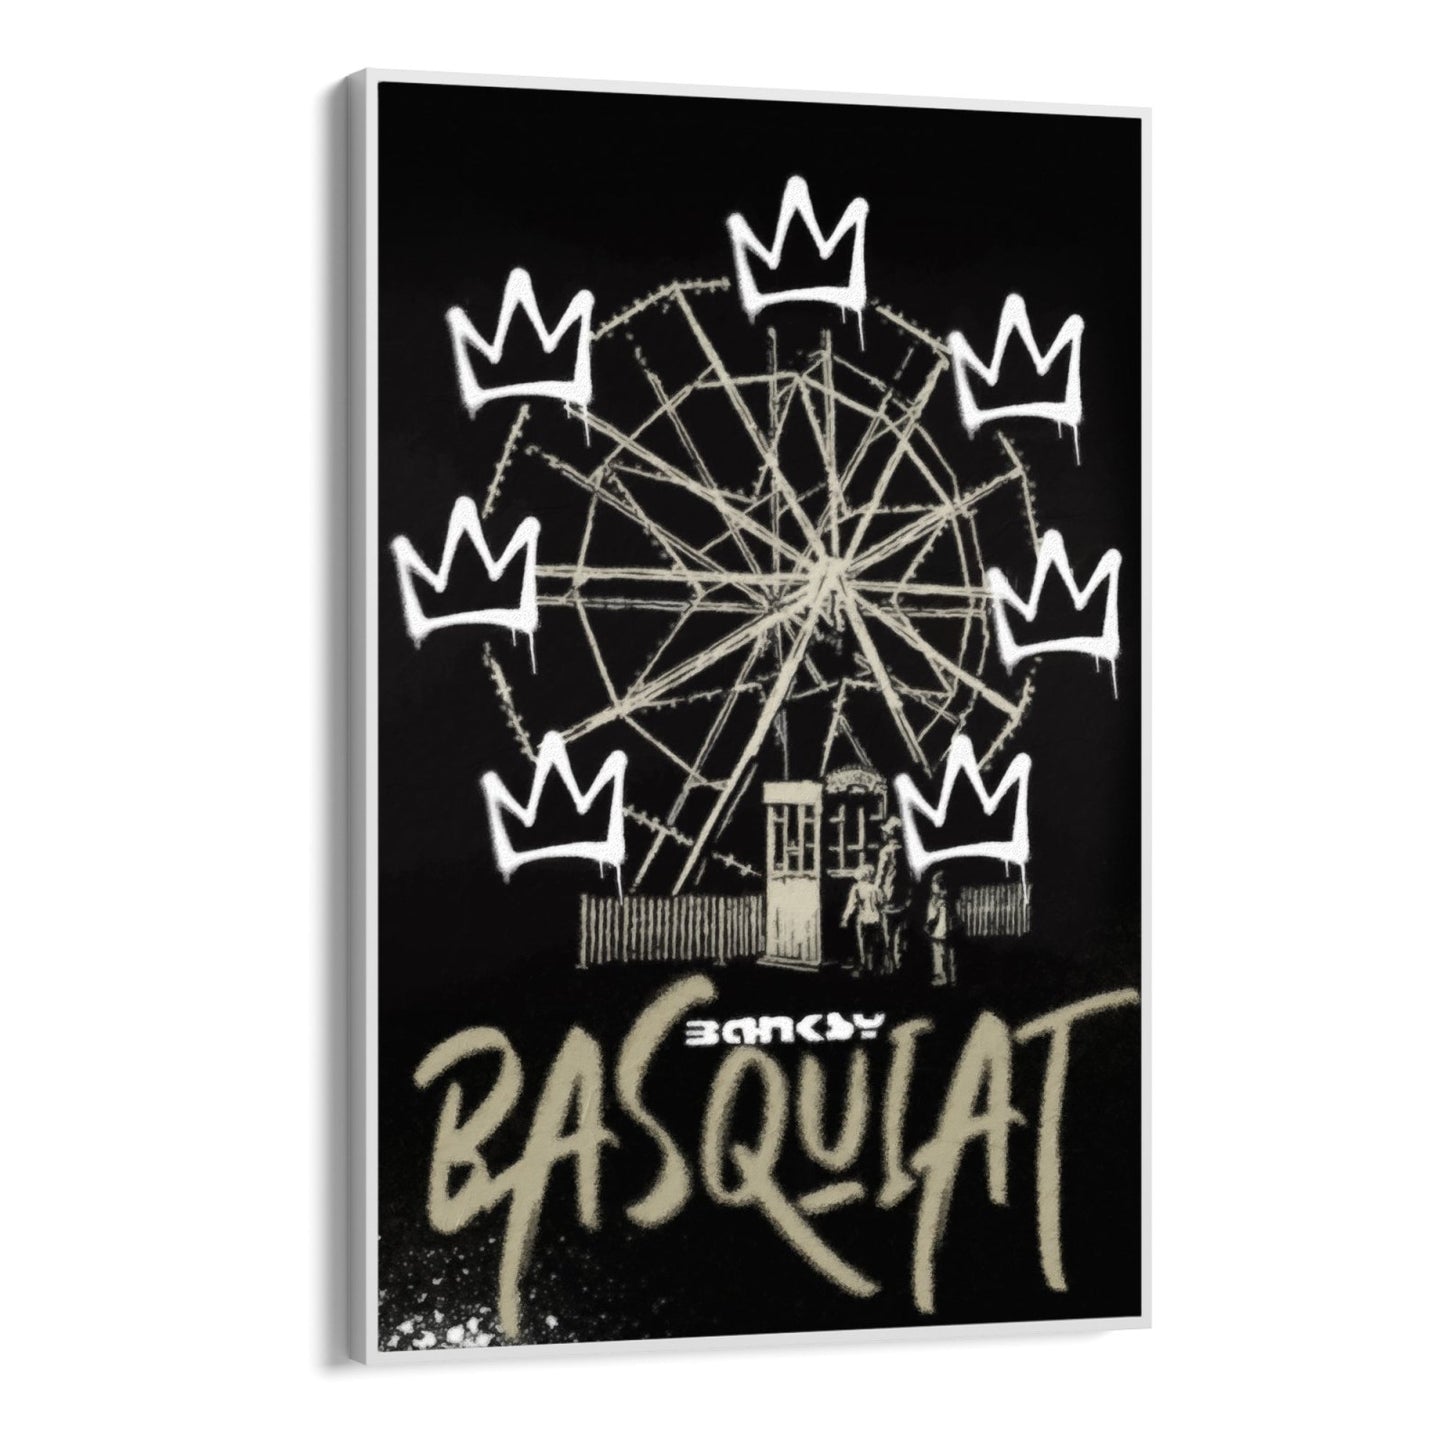 Graffitis de Banksy Basquiat